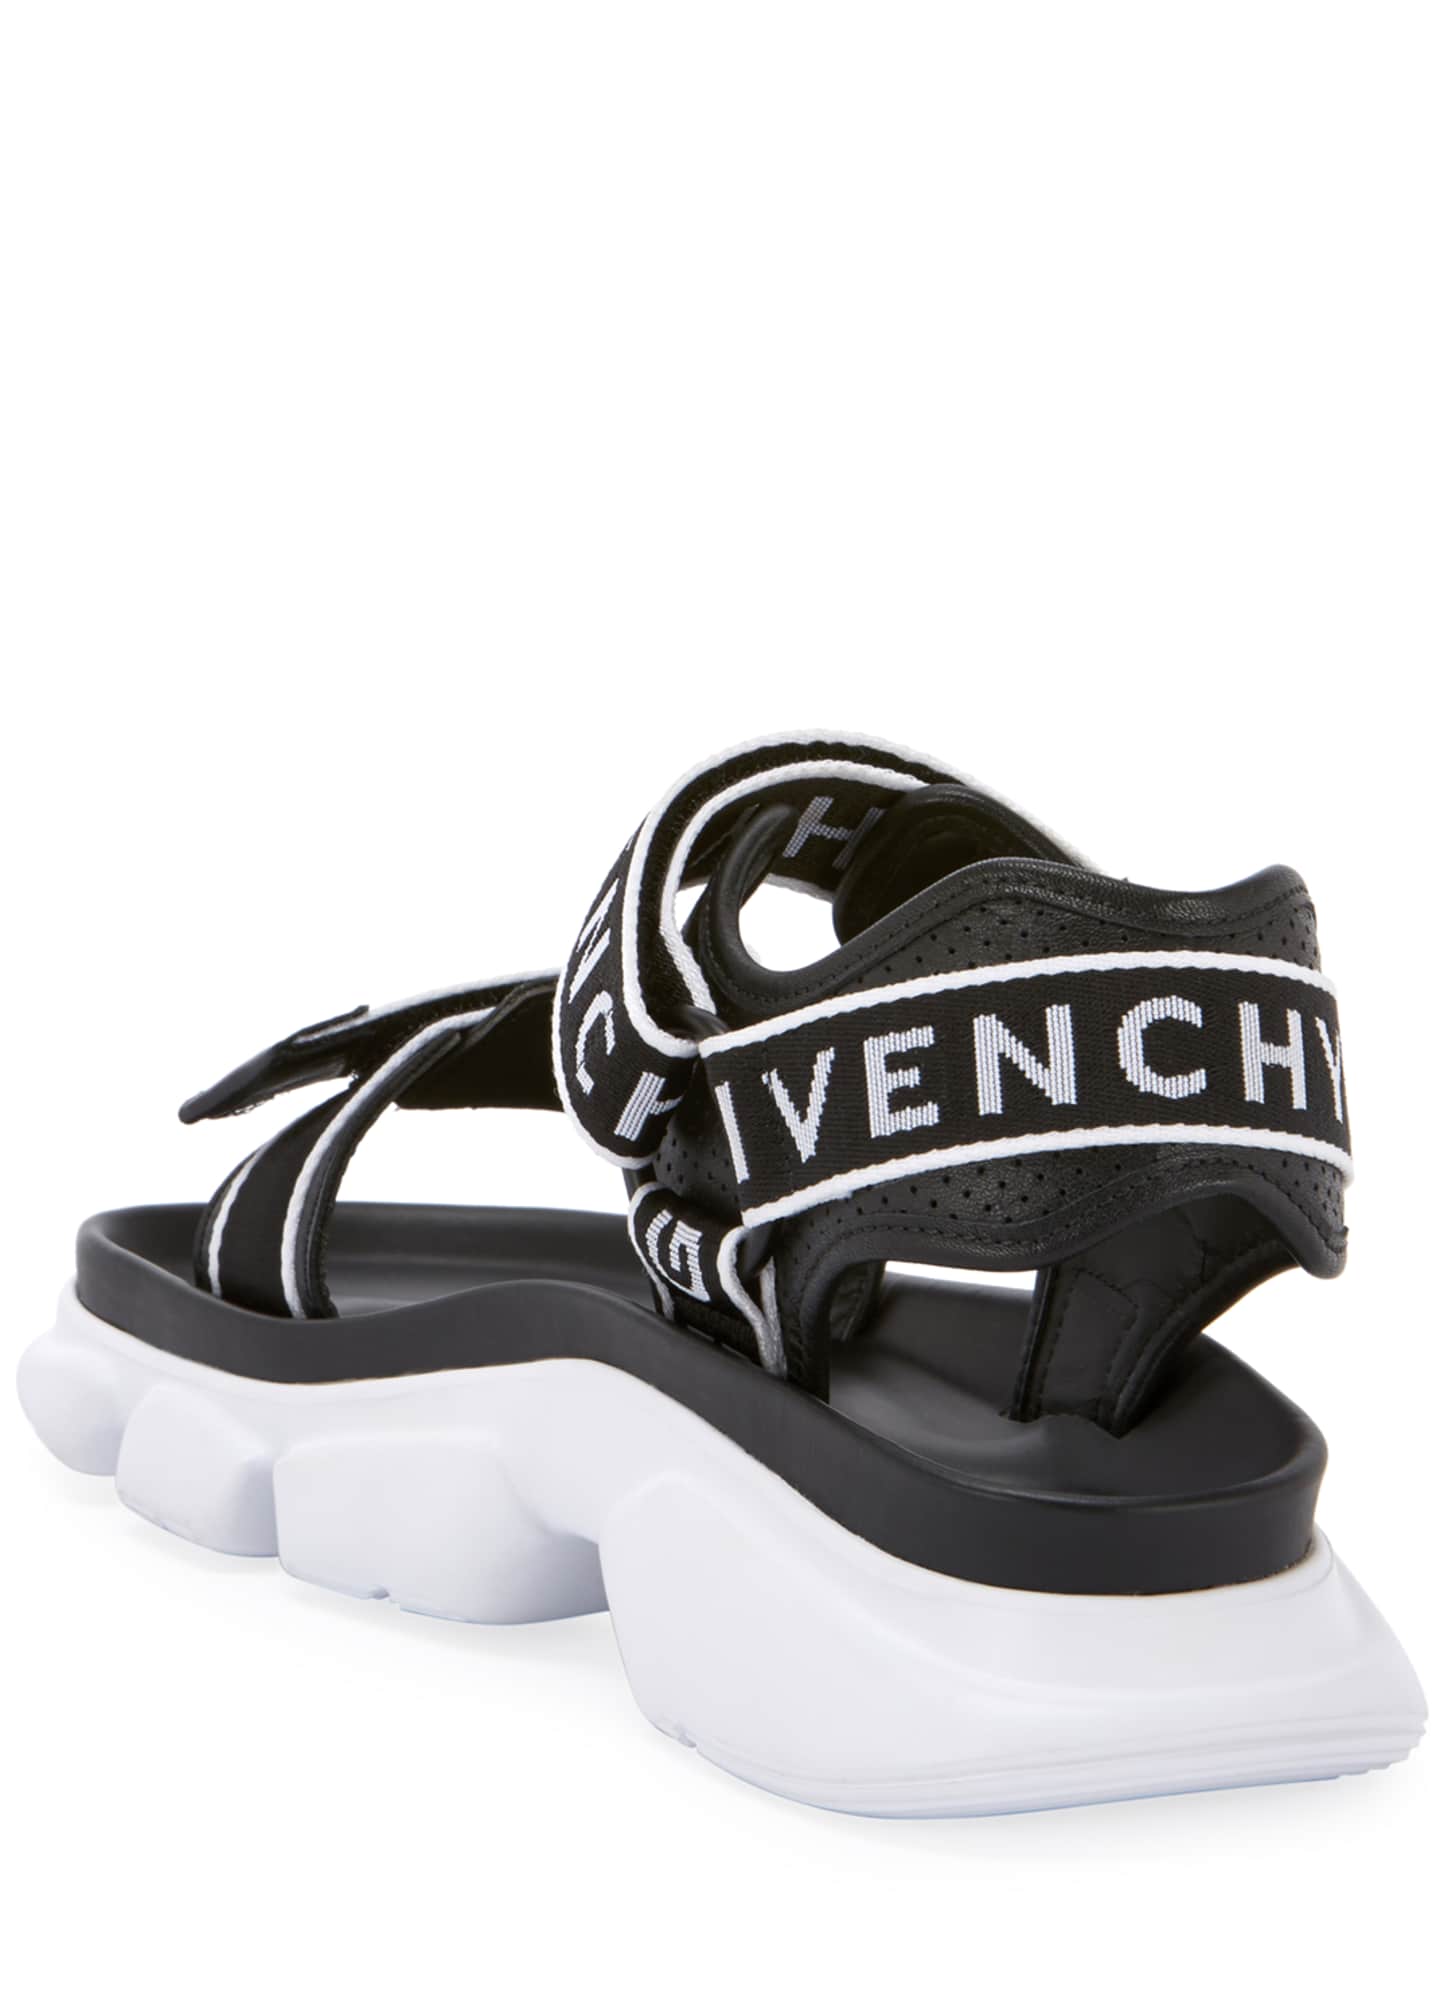 Givenchy Jaw Logo Web Sandals - Bergdorf Goodman